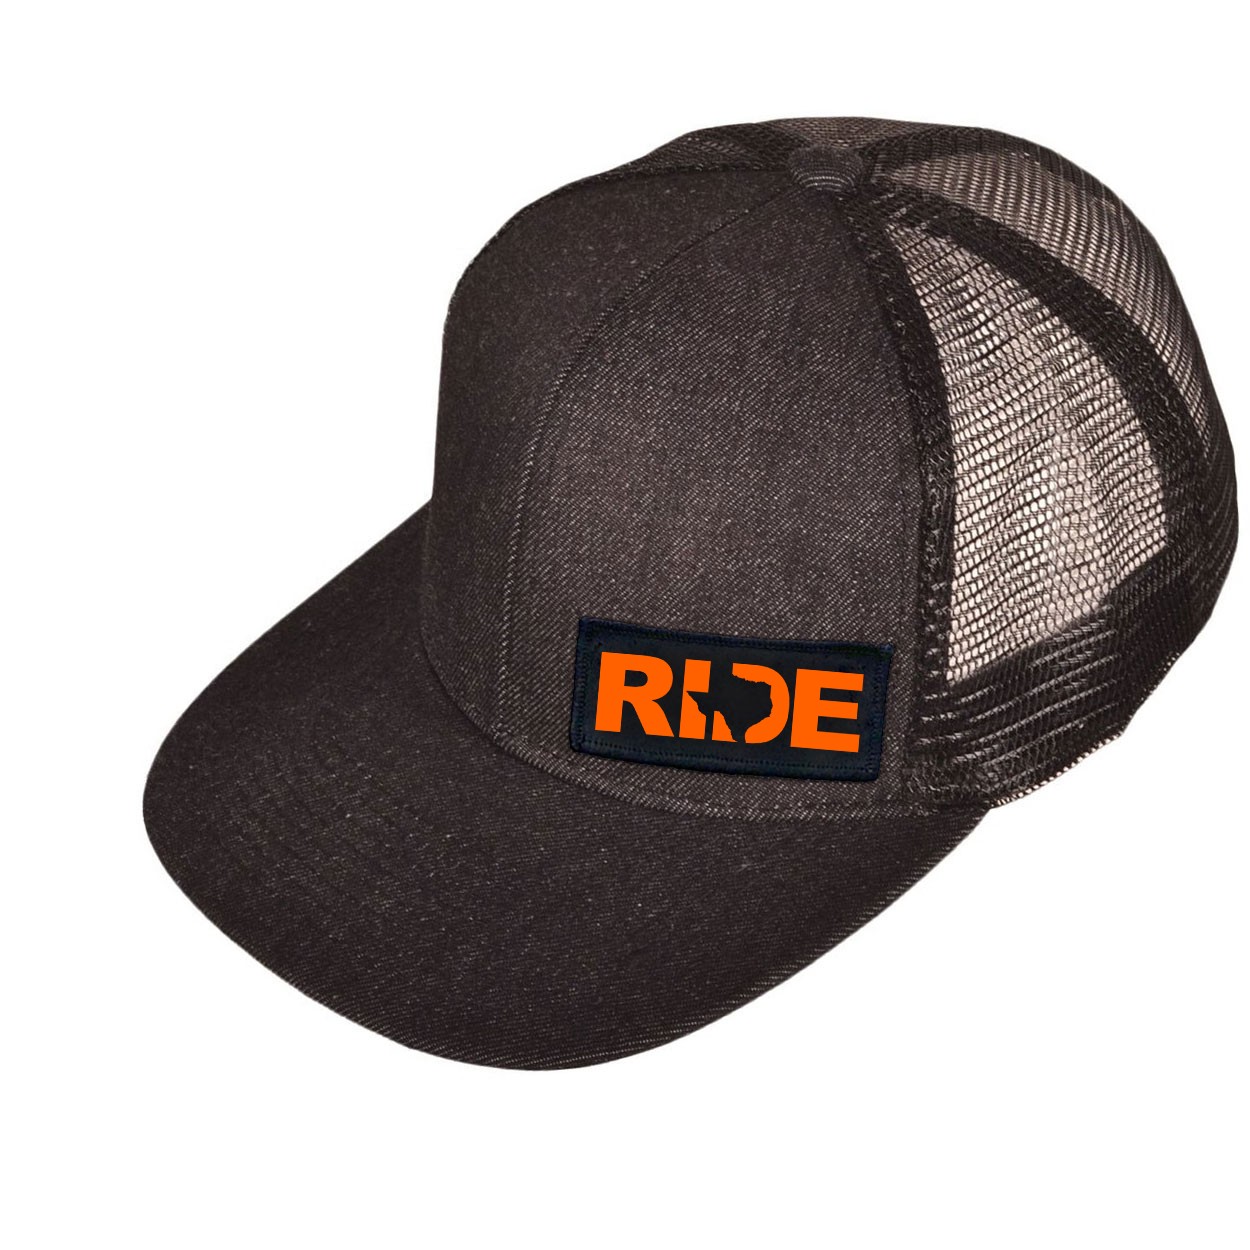 Ride Texas Night Out Woven Patch Snapback Flat Brim Hat Black Denim (Orange Logo)